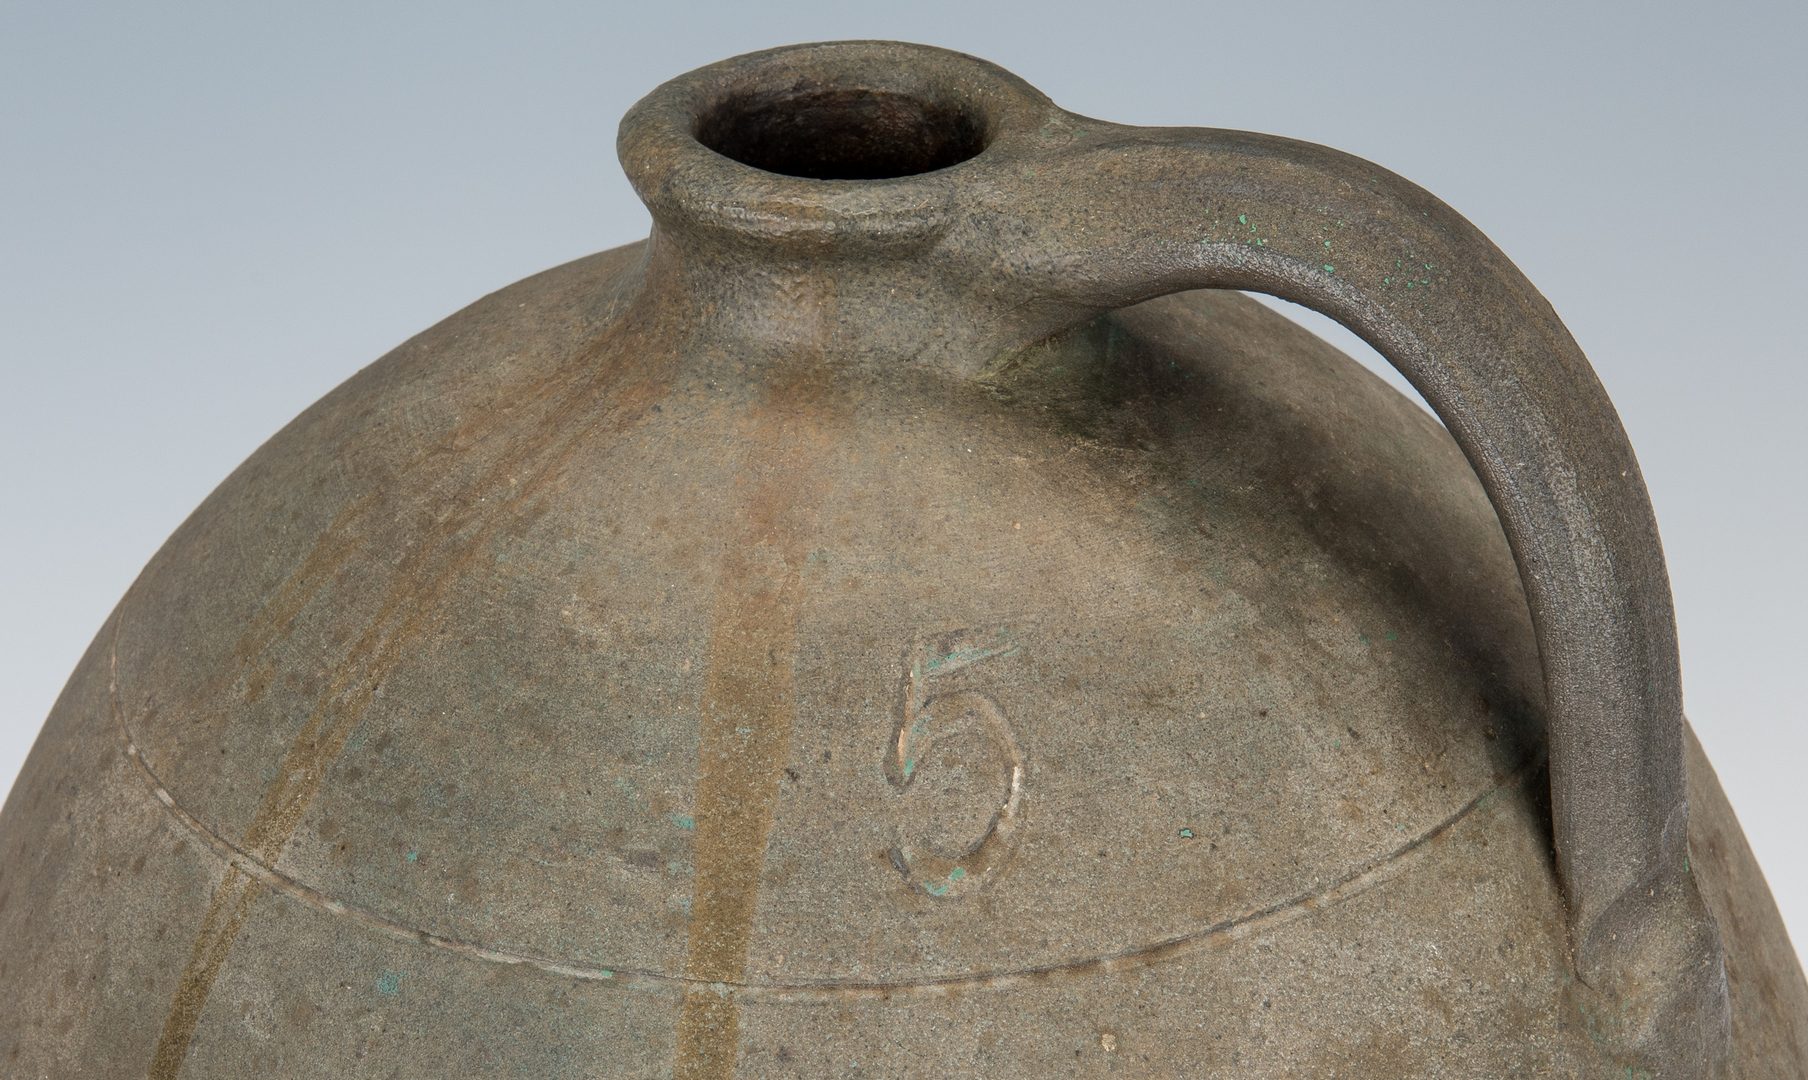 Lot 188: James Lafever 5-gallon Pottery Jug